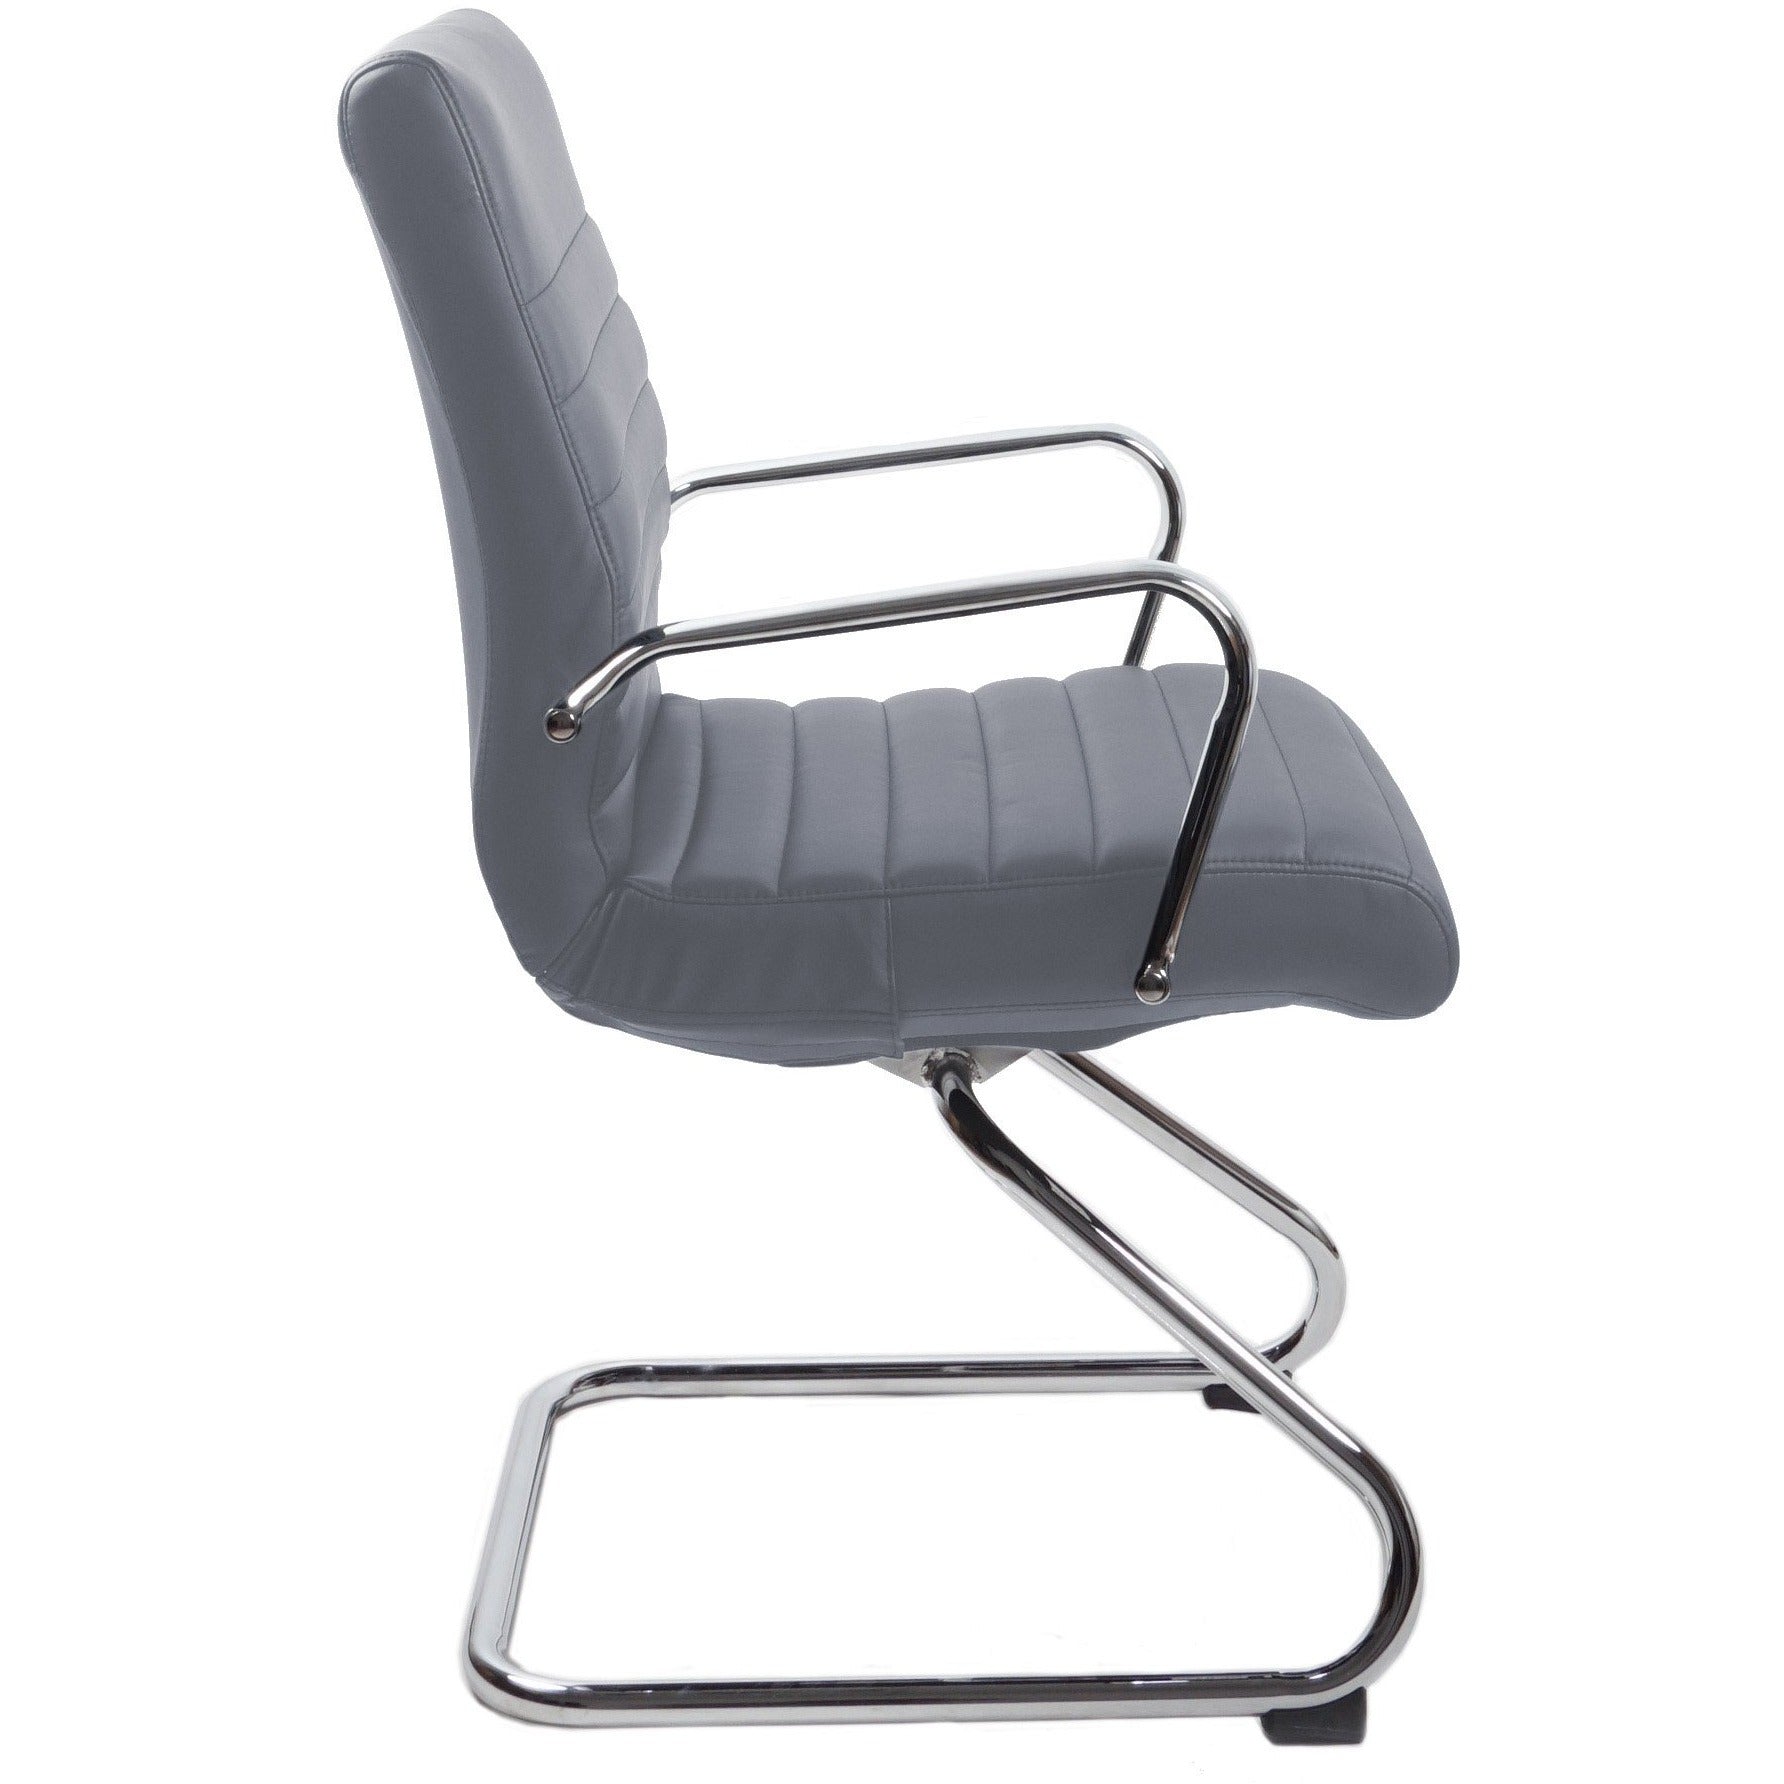 RealBiz II Modern Comfort Series Visitor LeatherPro Chair, Slate Gray